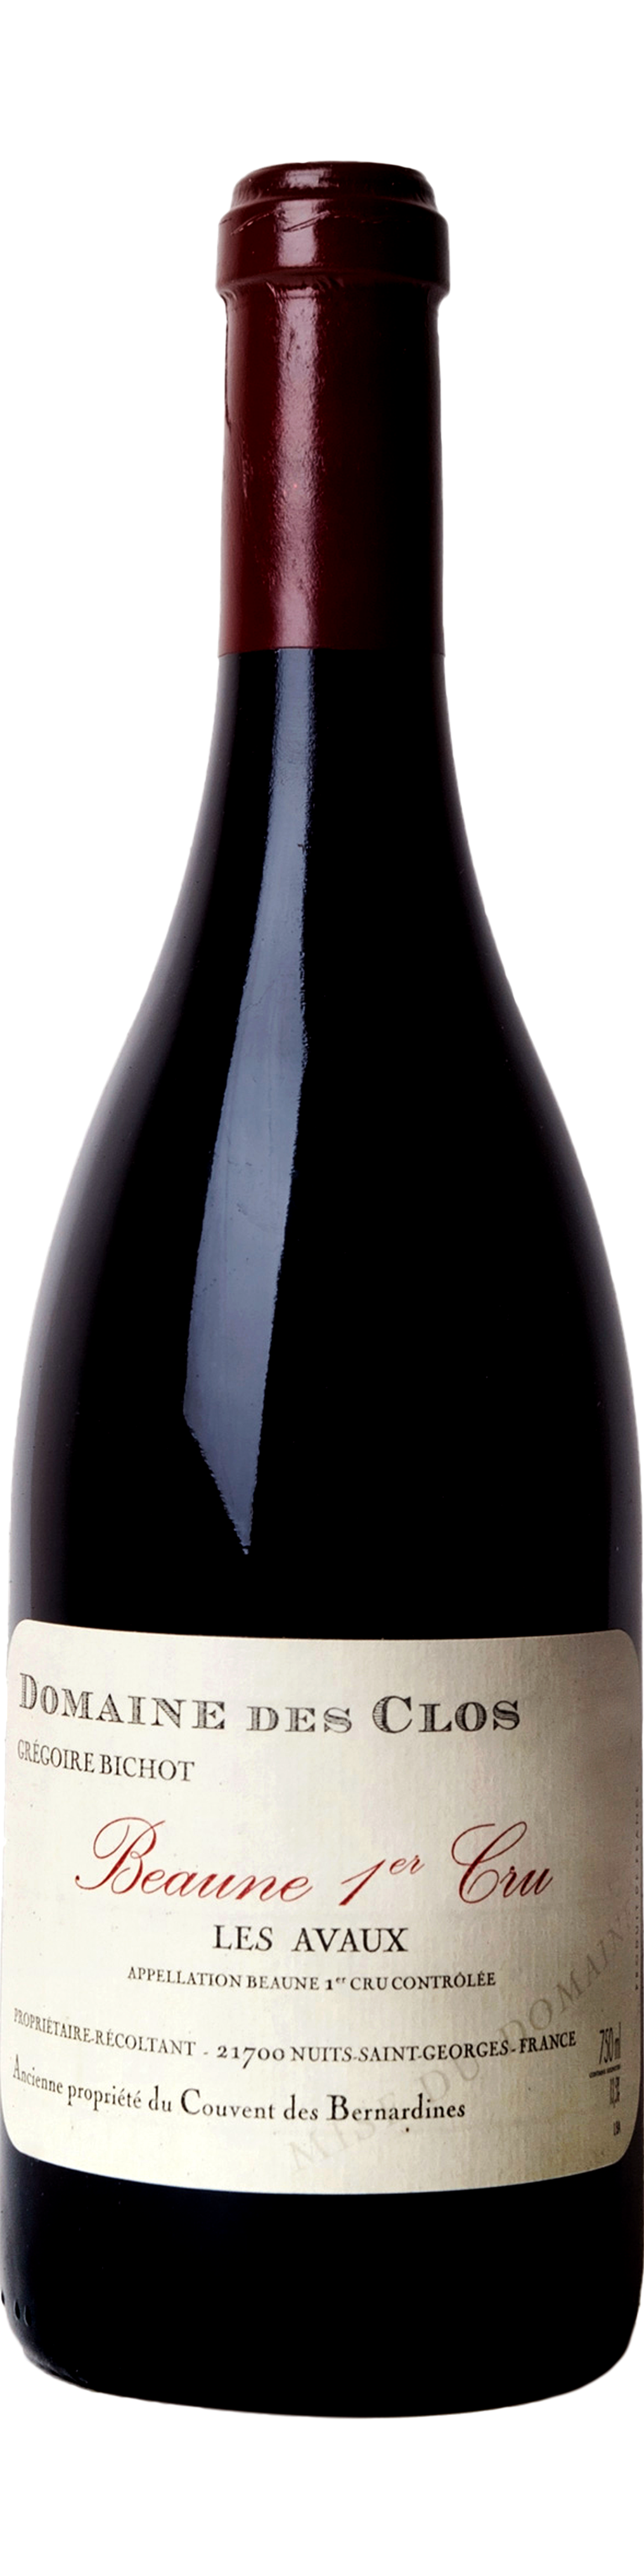 Bottle shot of 2017 Beaune 1er Cru Les Avaux